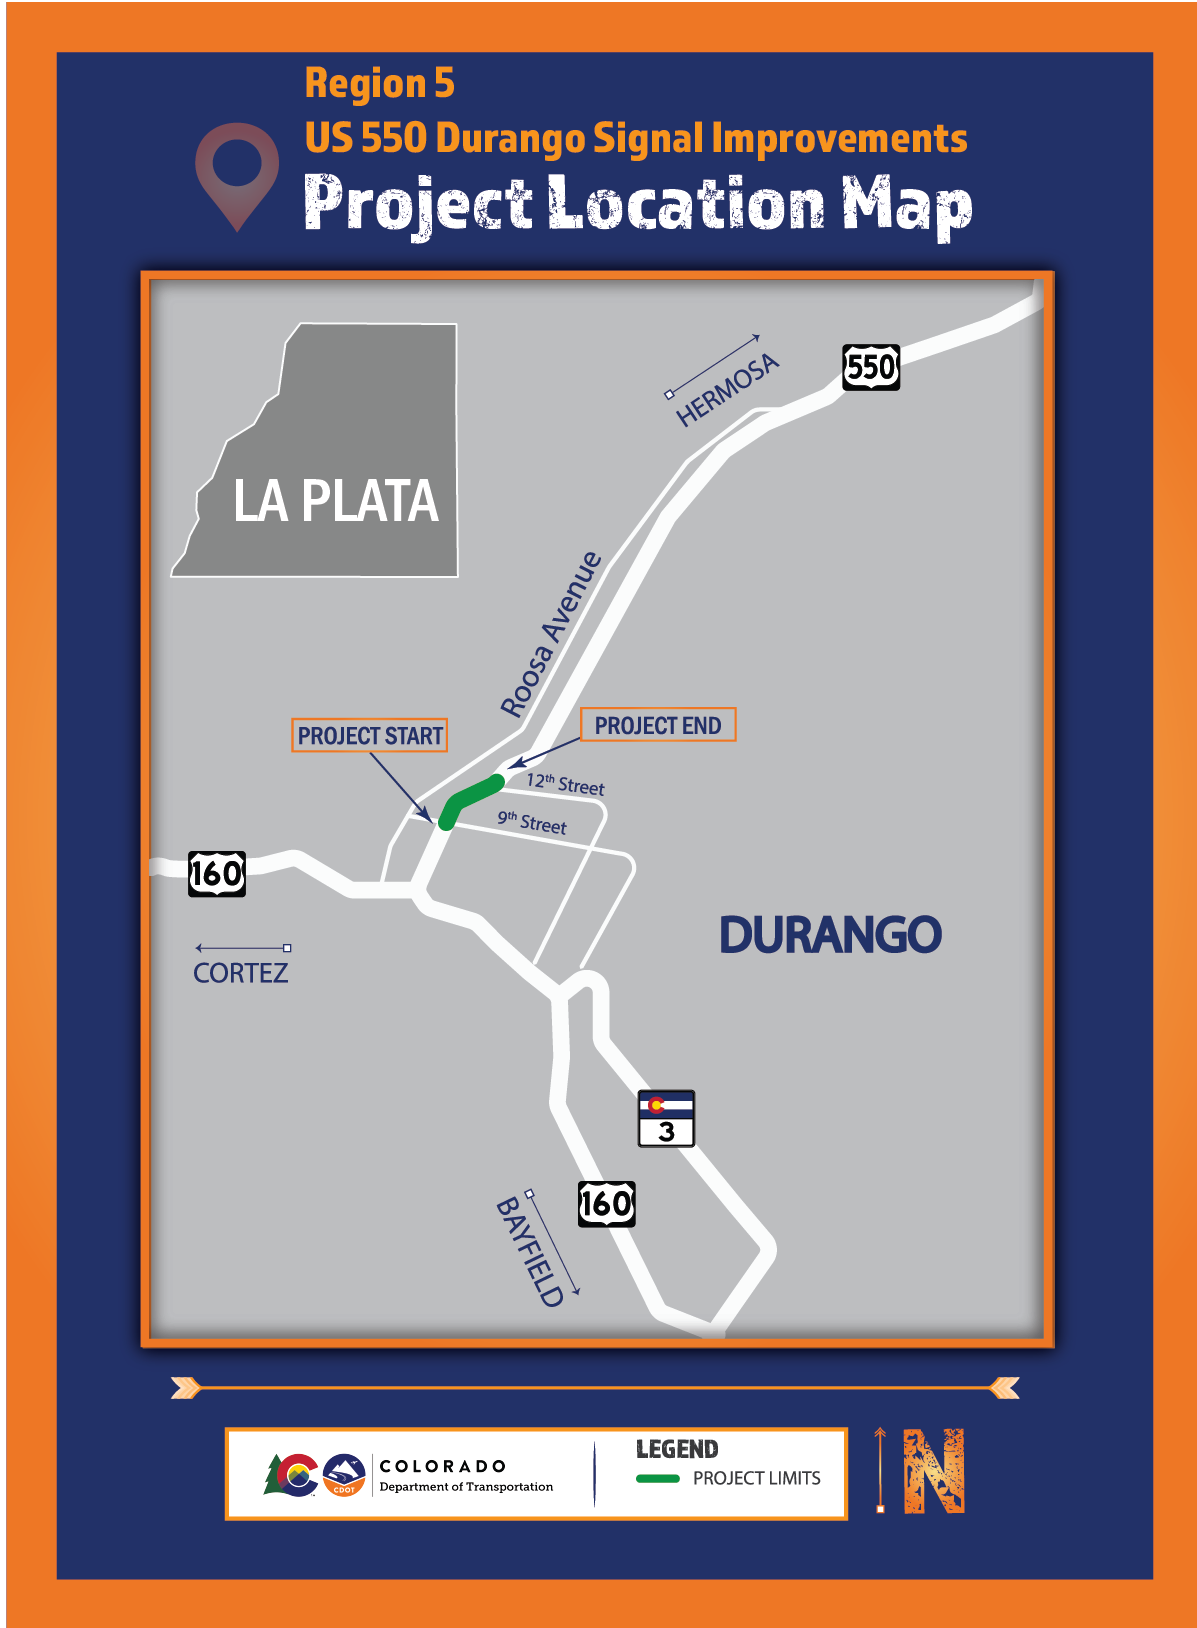 US 550 Durango Signal Improvements project map detail image